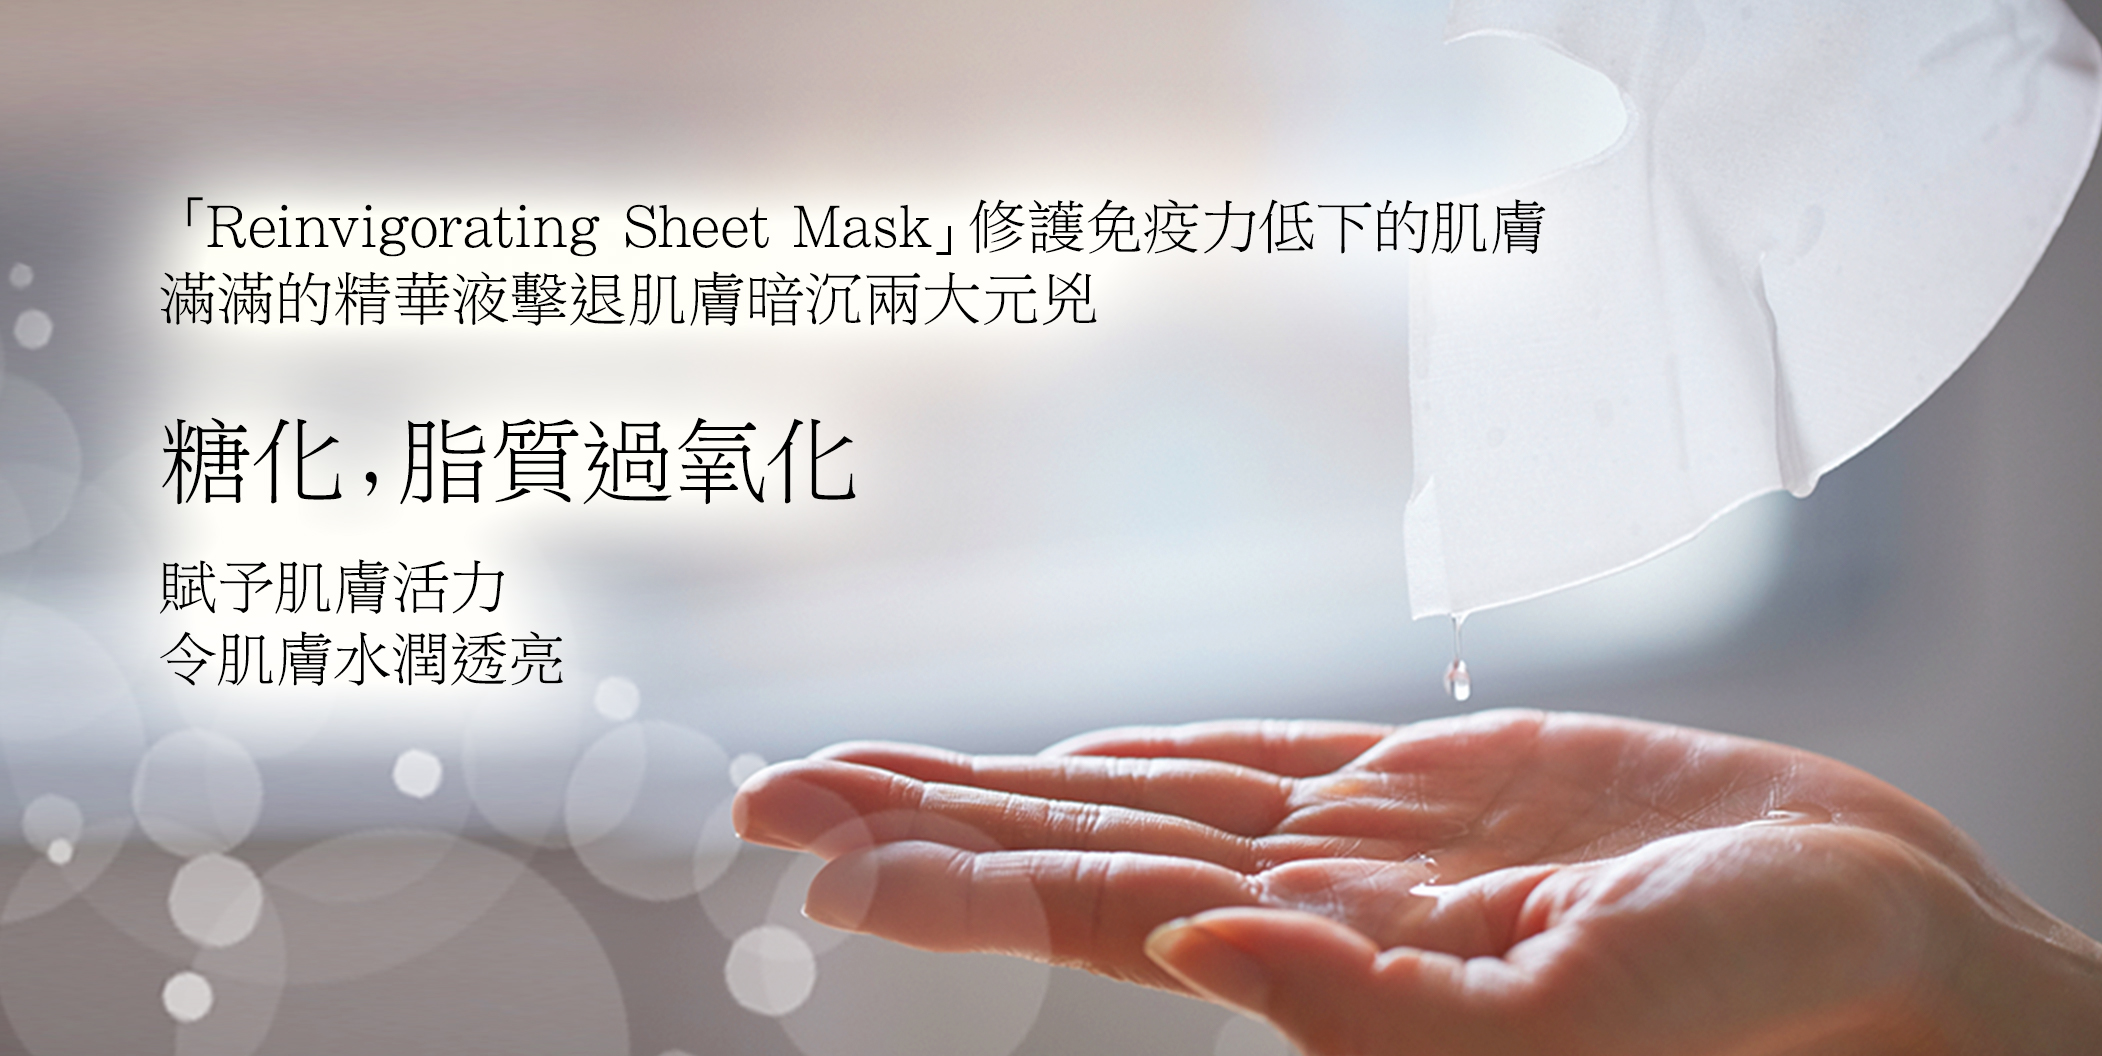 「Reinvigorating Sheet Mask」修護免疫力低下的肌膚 滿滿的精華液擊退肌膚暗沉兩大元兇 糖化，脂質過氧化 賦予肌膚活力 令肌膚水潤透亮